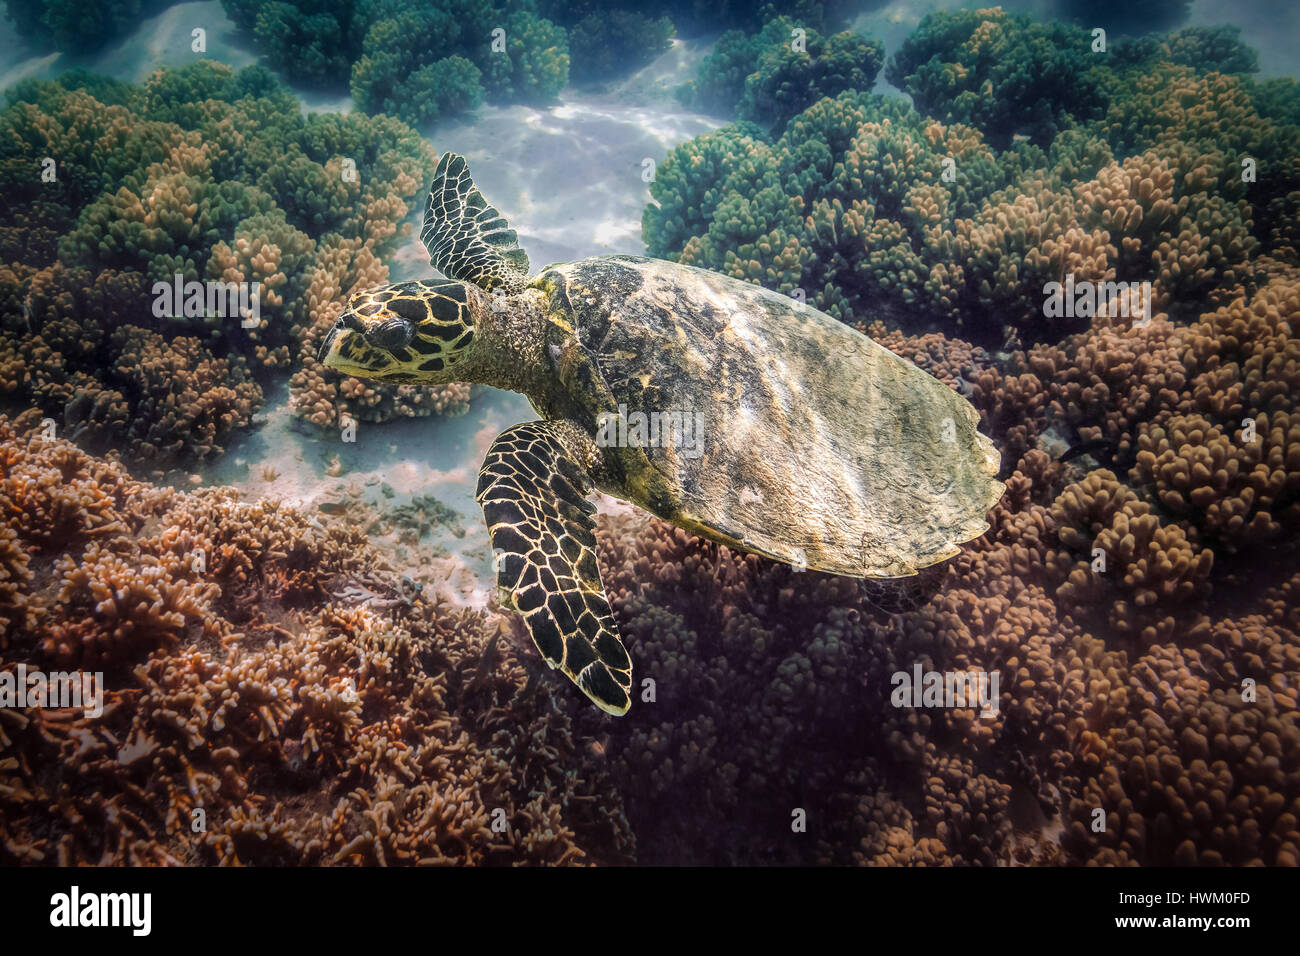 Hawksbill Turtle (Eretmochelys imbricata) Stock Photo